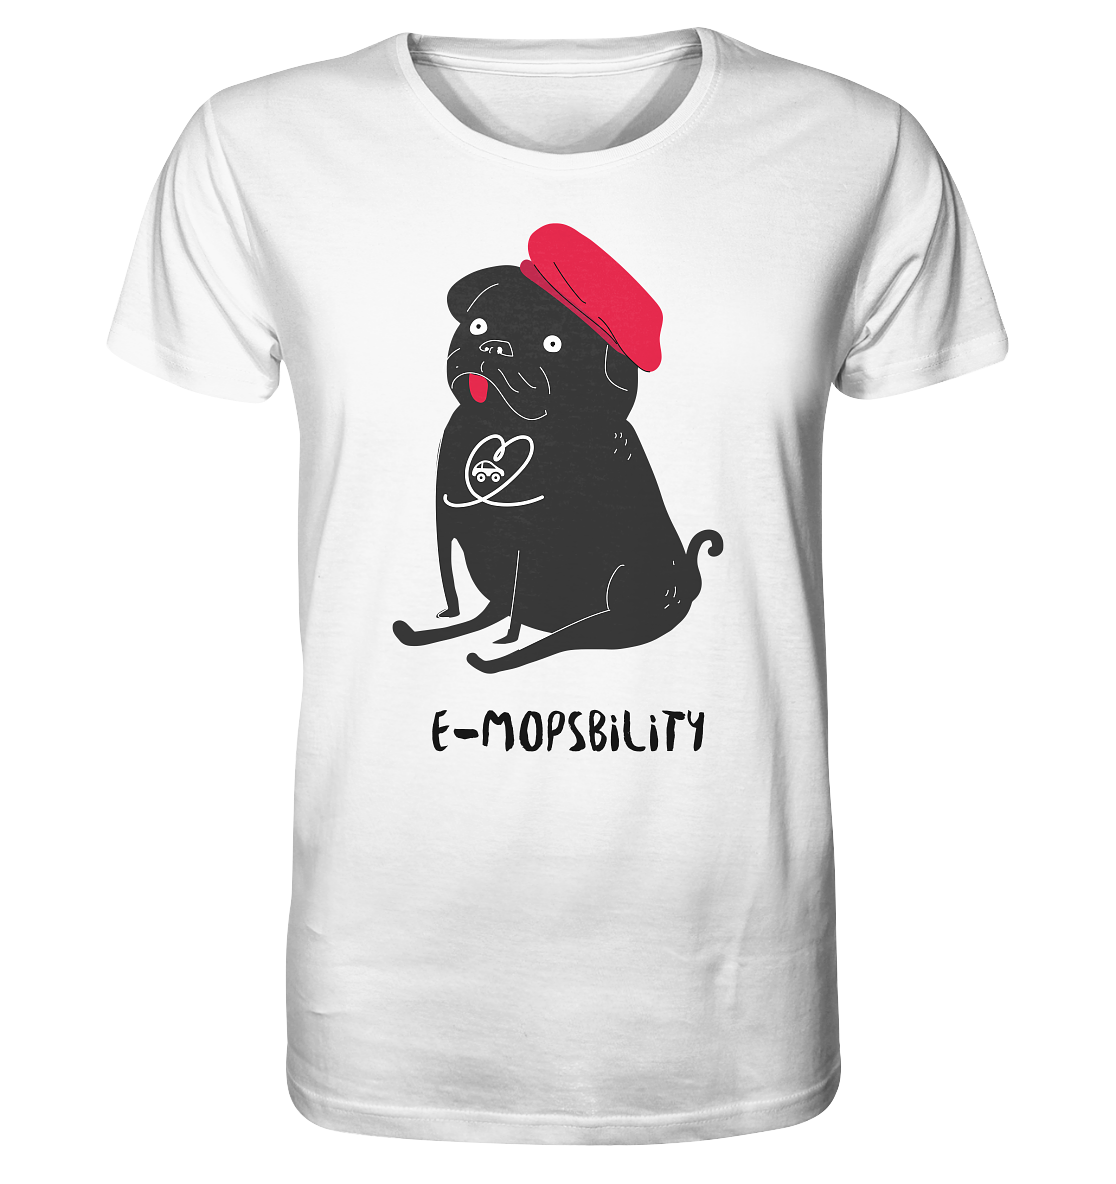 E-Mopsbility ORGANIC - Organic Shirt